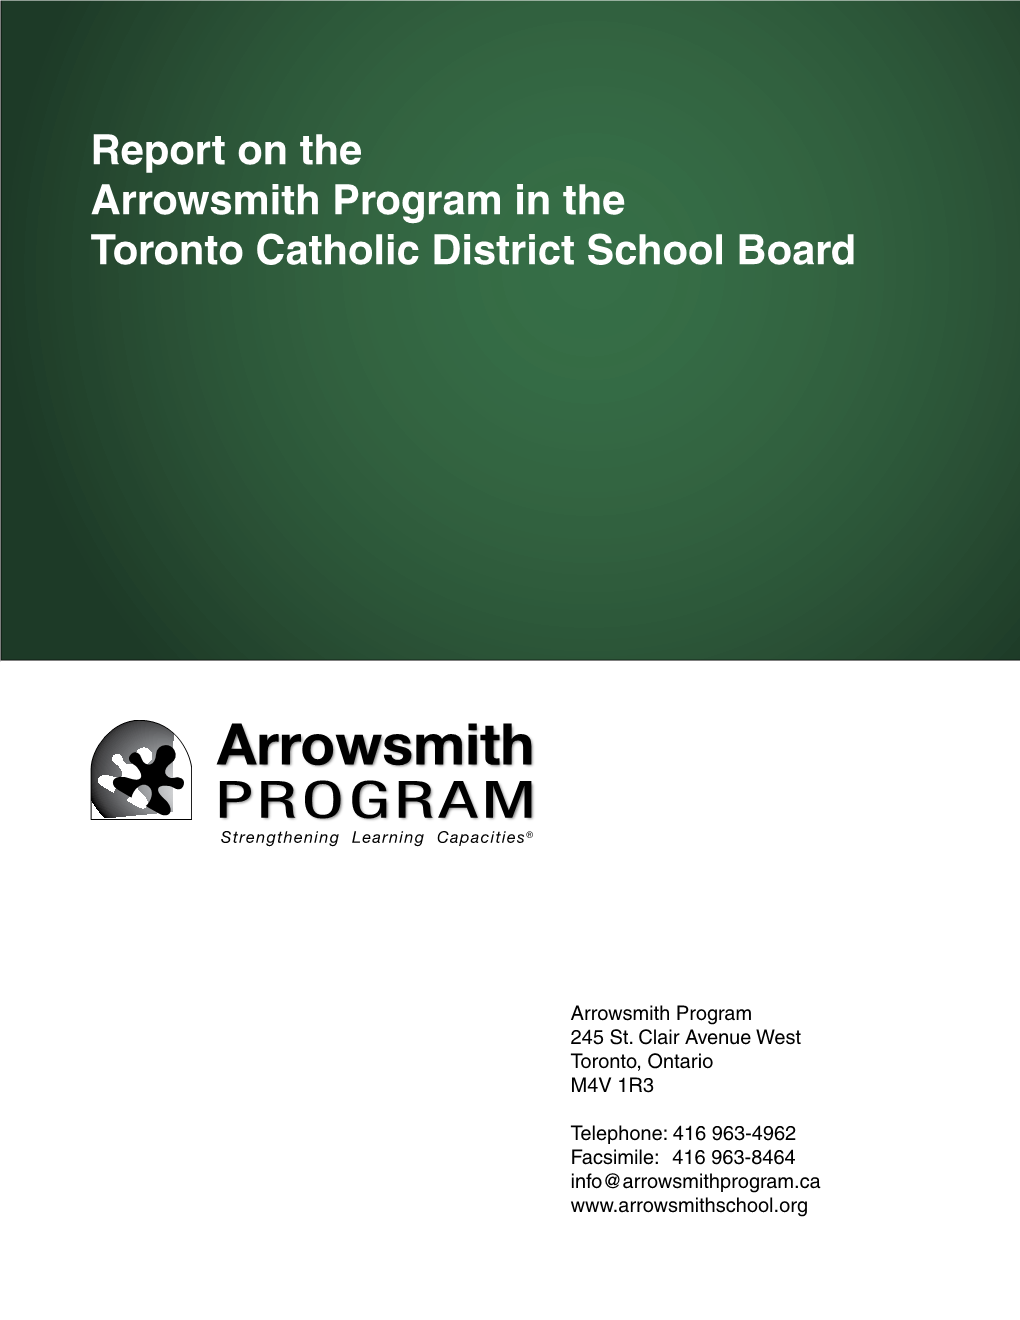 Arrowsmith School Program He Looks Forward to School Every Offered Throughout the Catholic School Board